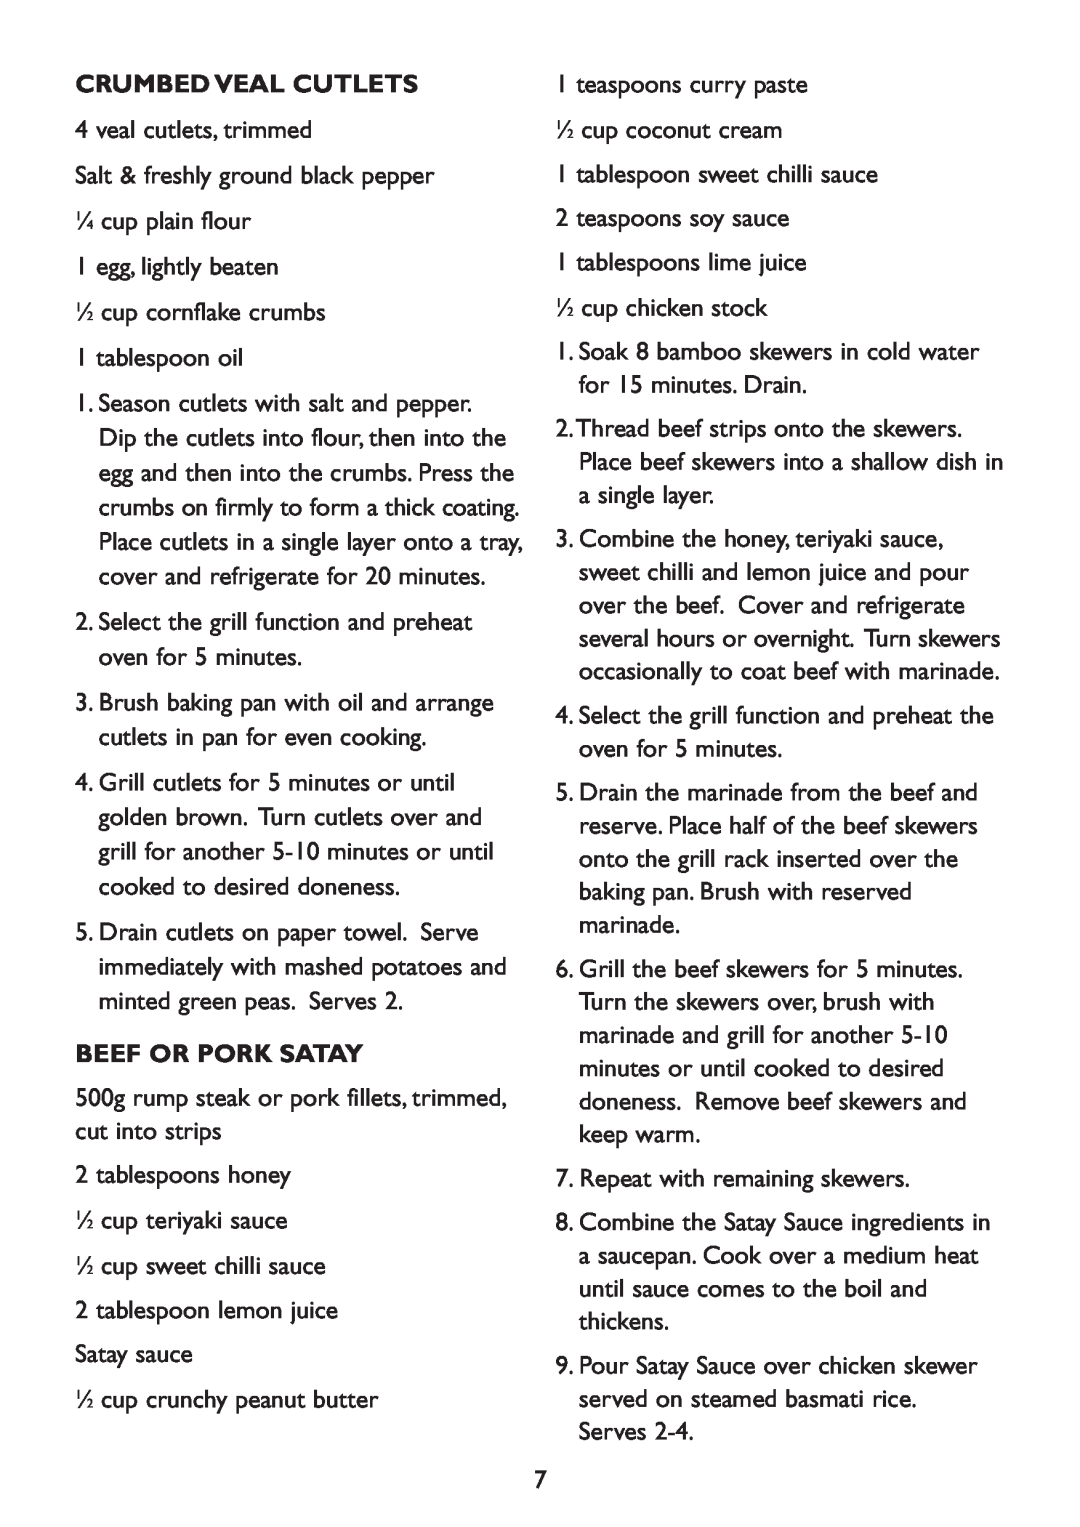 Kambrook KOT100 manual Crumbed Veal Cutlets, Beef Or Pork Satay 